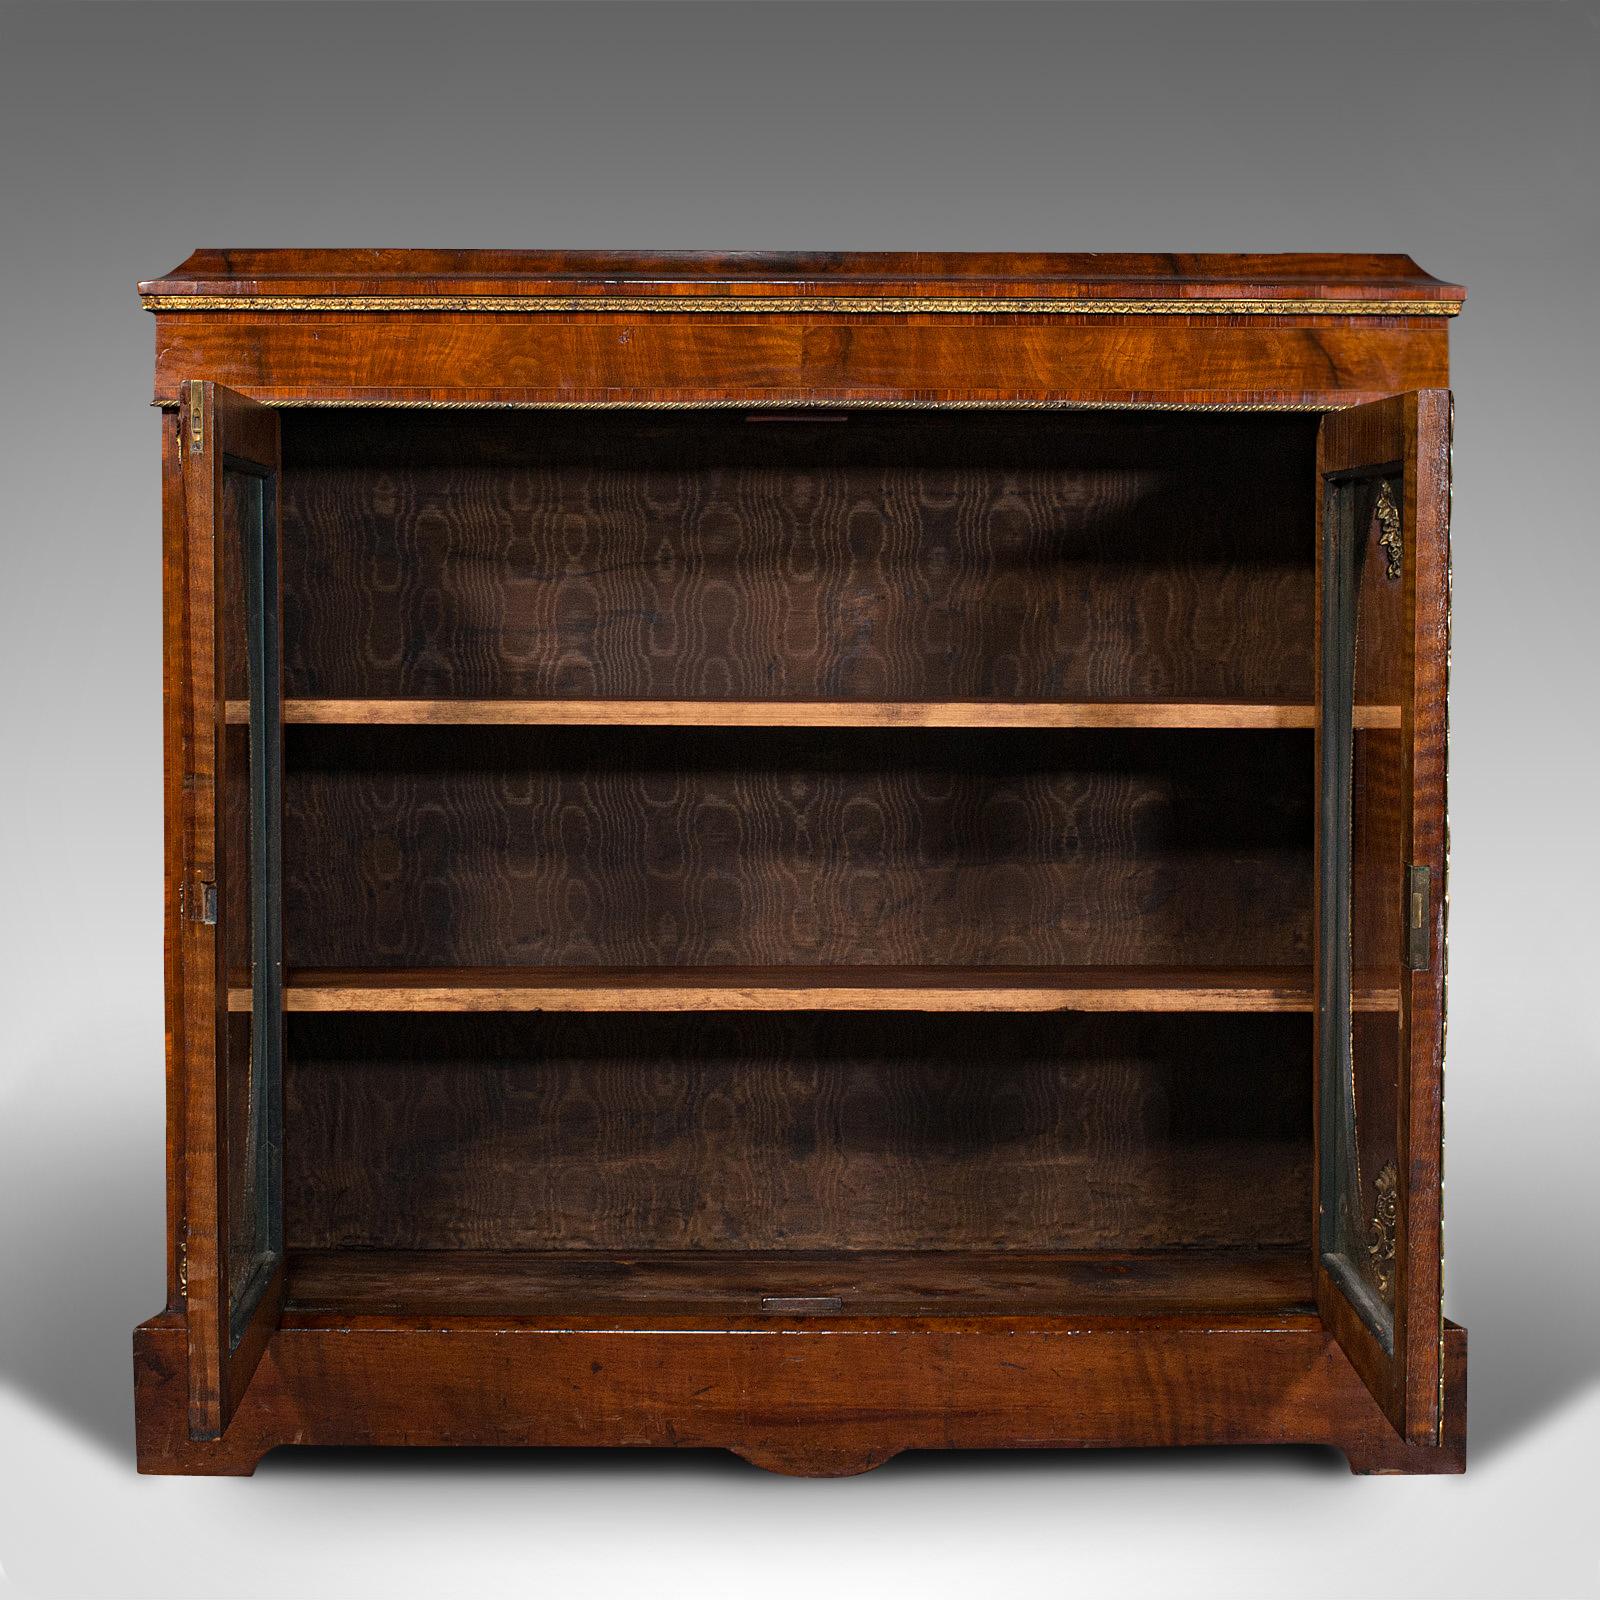 British Antique Display Bookcase, English, Walnut, Boxwood, Empire, Cabinet, Regency